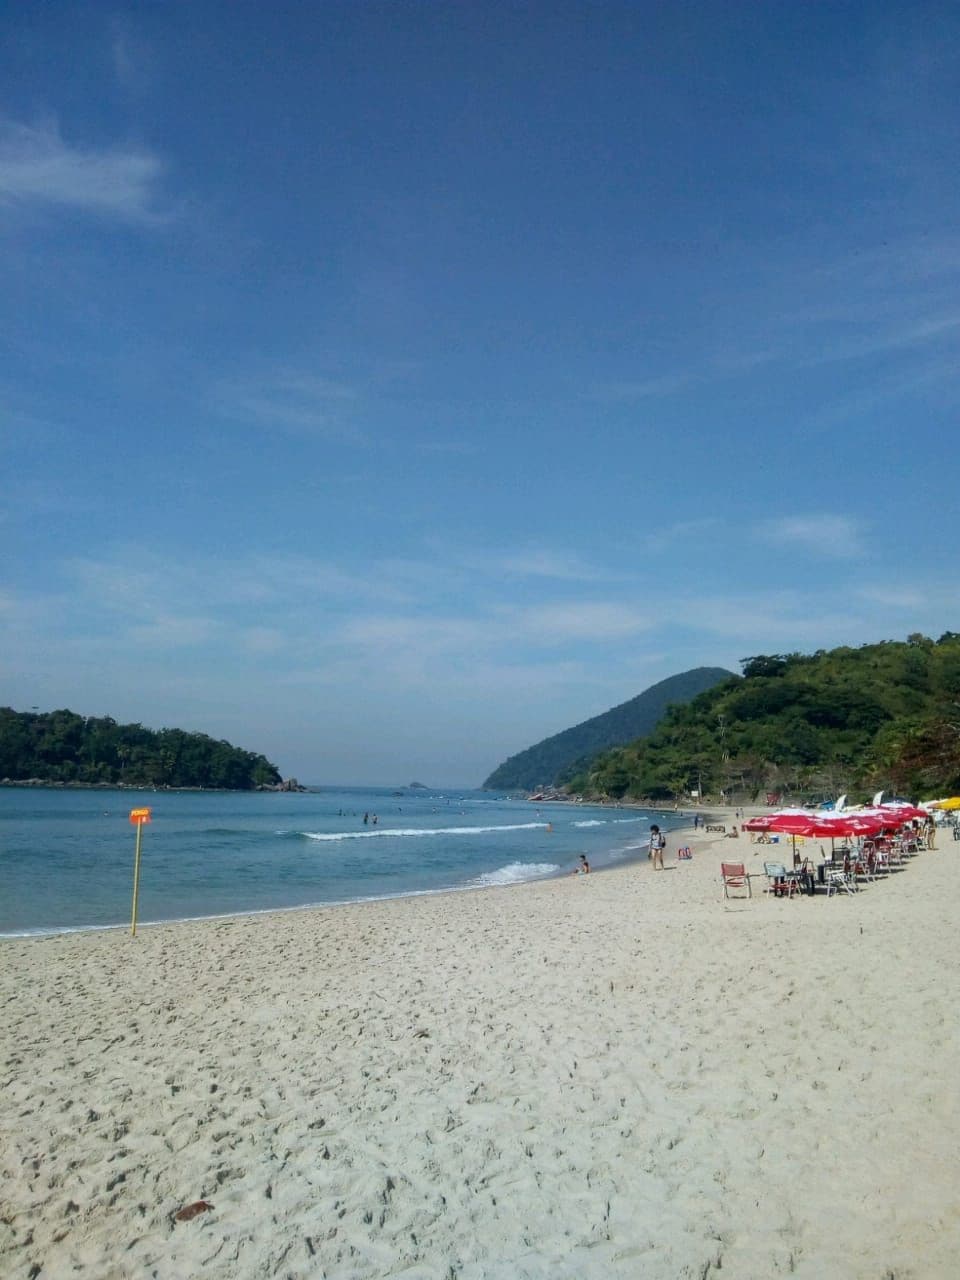 prainha Branco沙滩上的露营体验